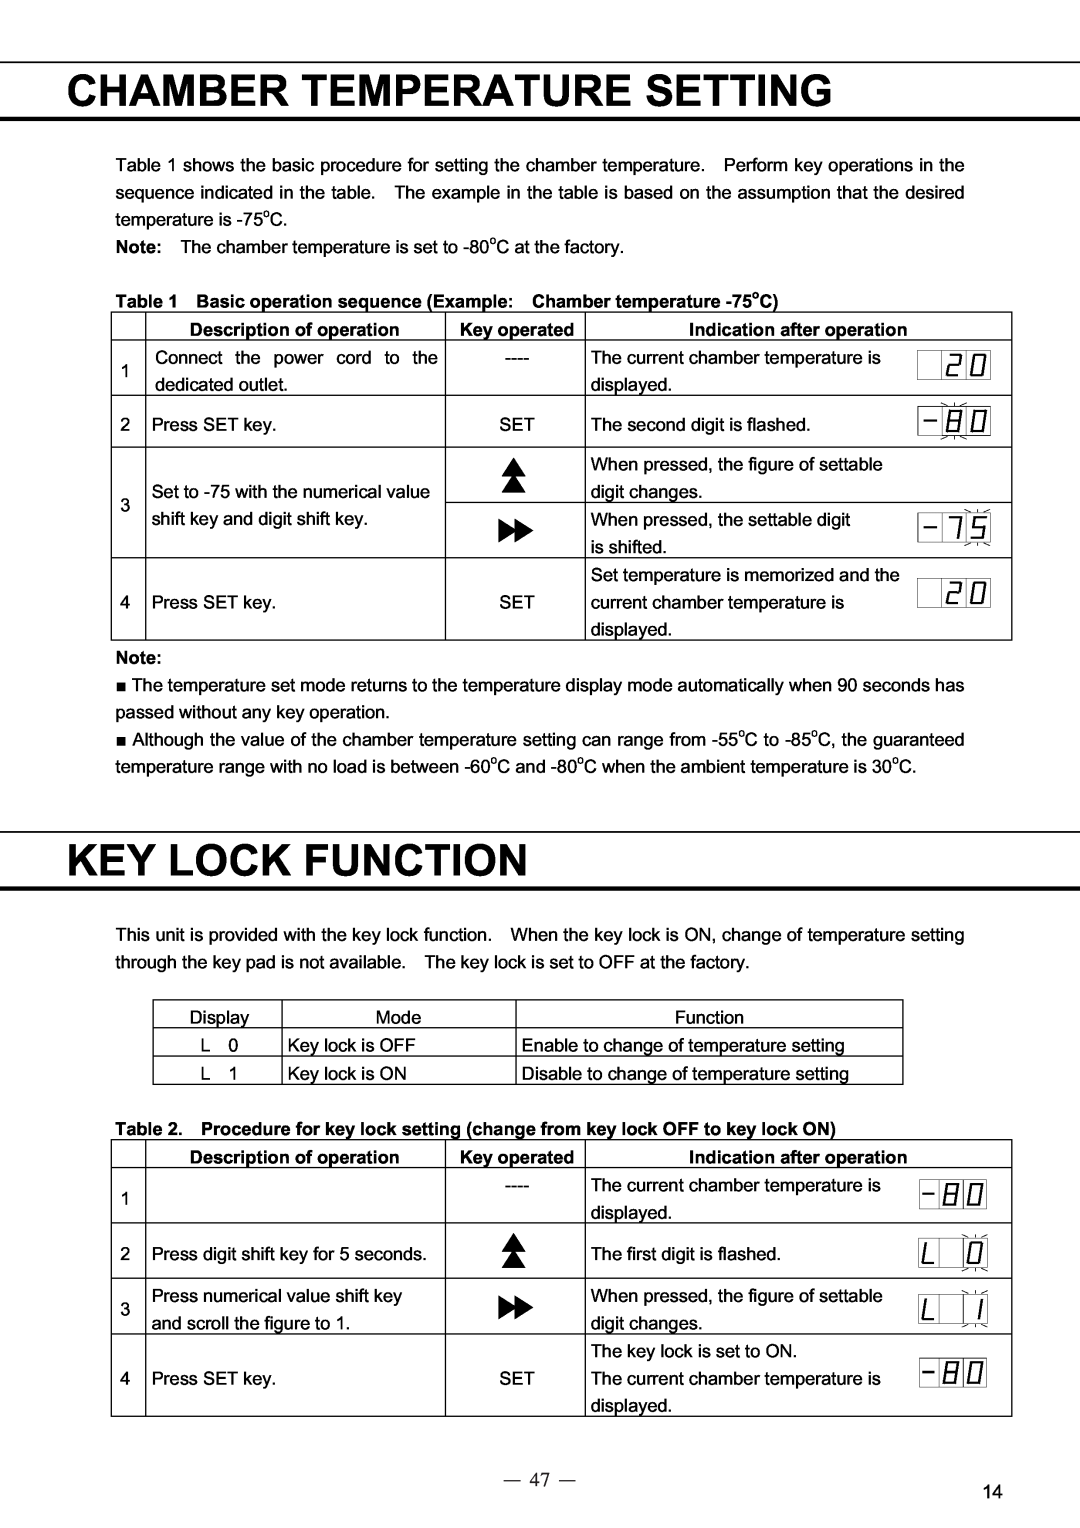 Sanyo MDF-C8V service manual Chamber Temperature Setting, Key Lock Function, Description of operation, Key operated 